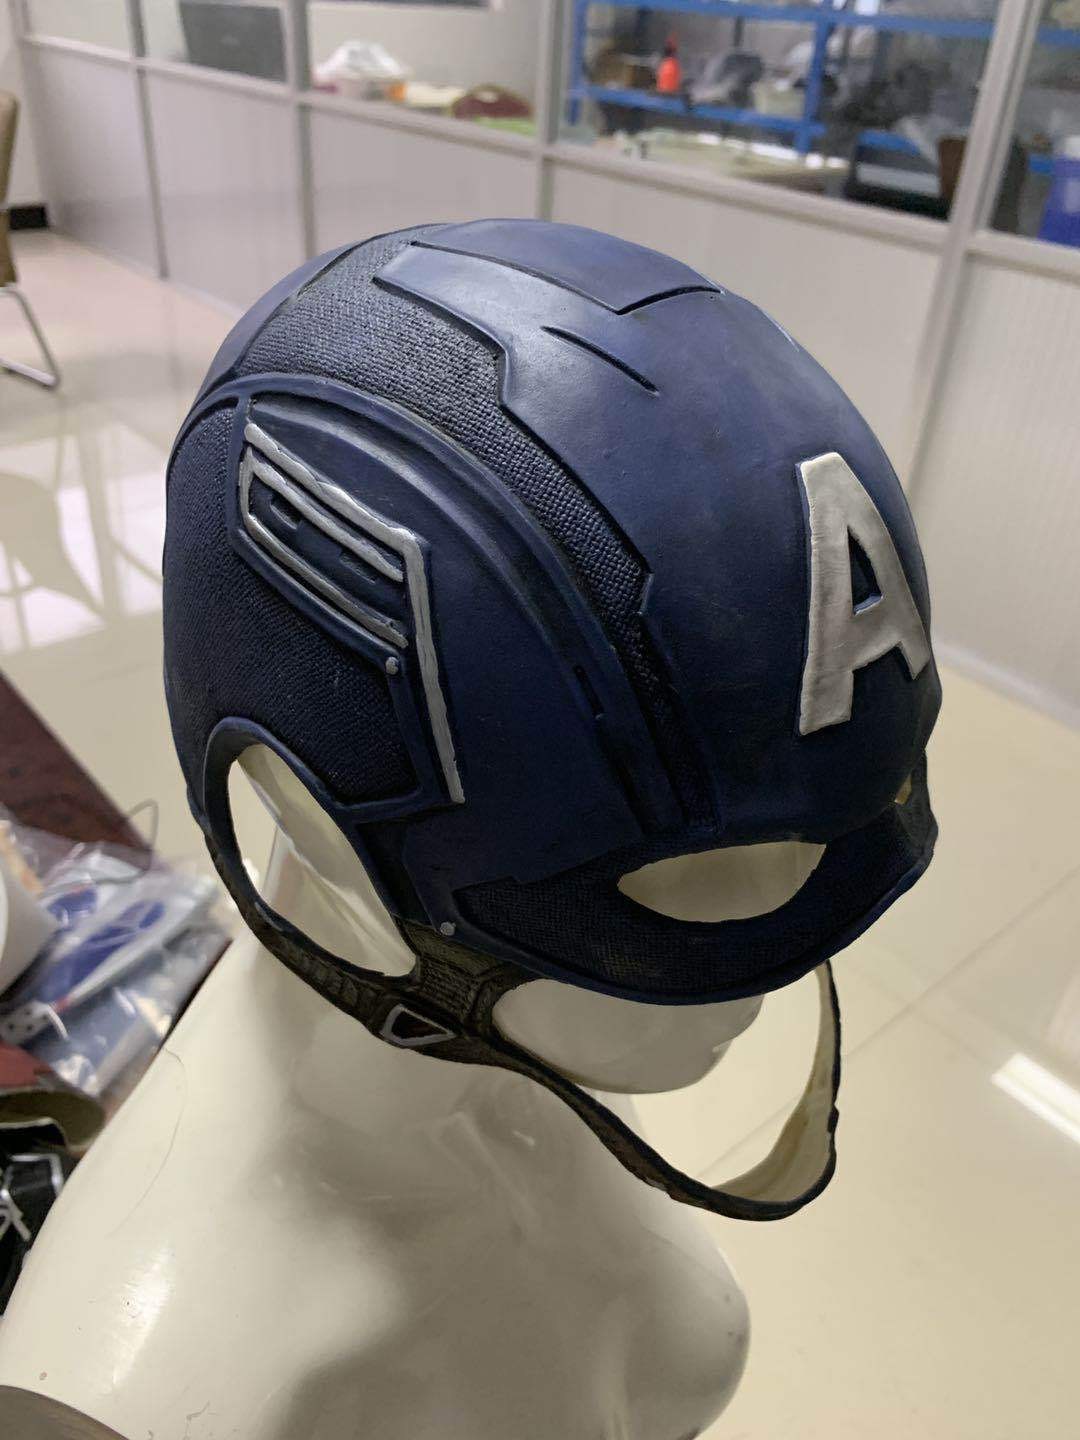 Latex Head Cover Captain America Head Cover Cosplay Costume Anime Latex Mask